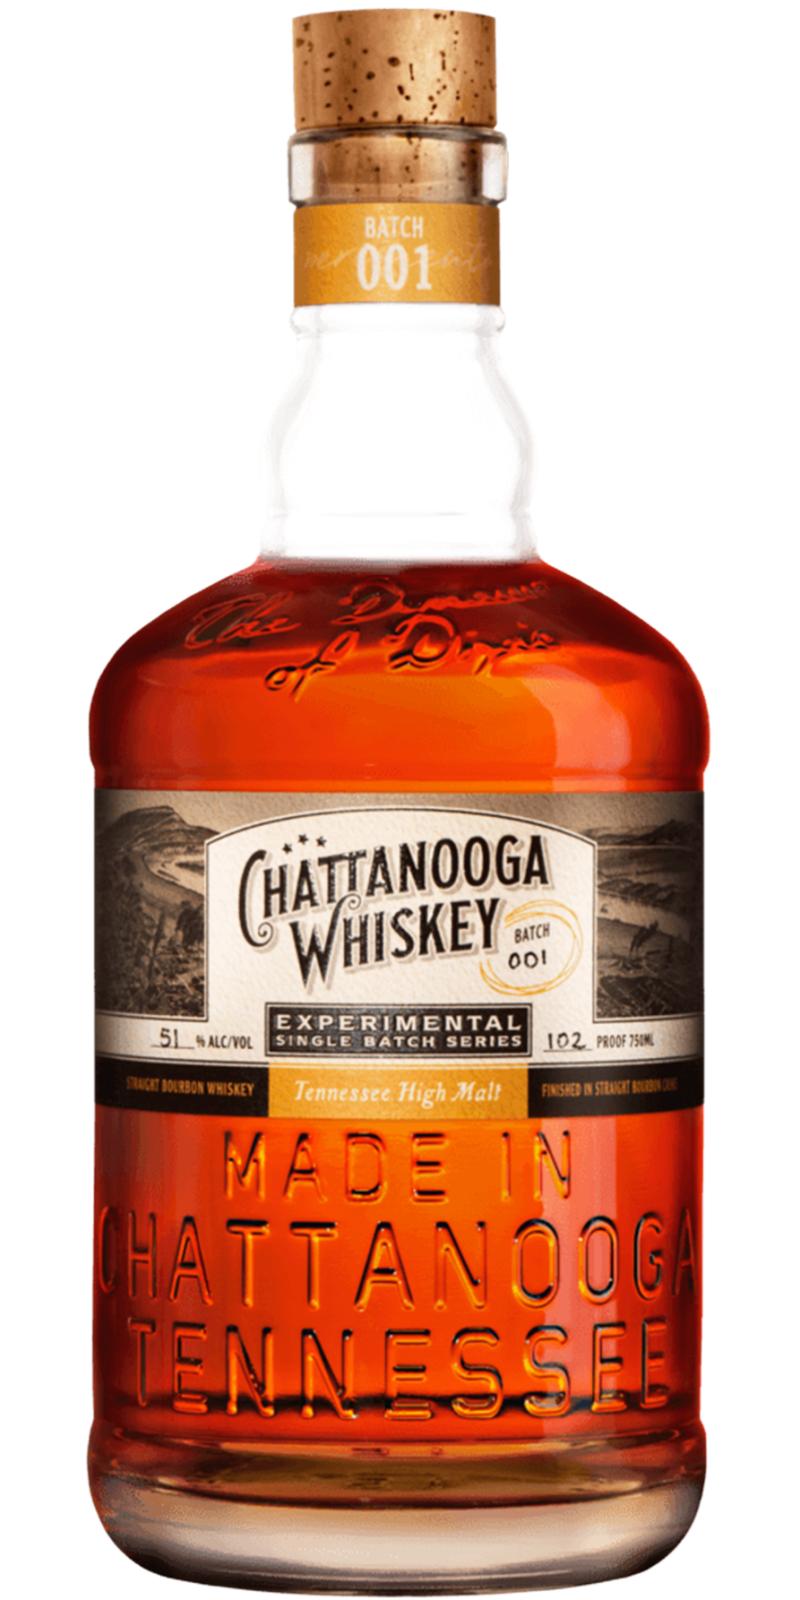 Chattanooga Whiskey Batch 001